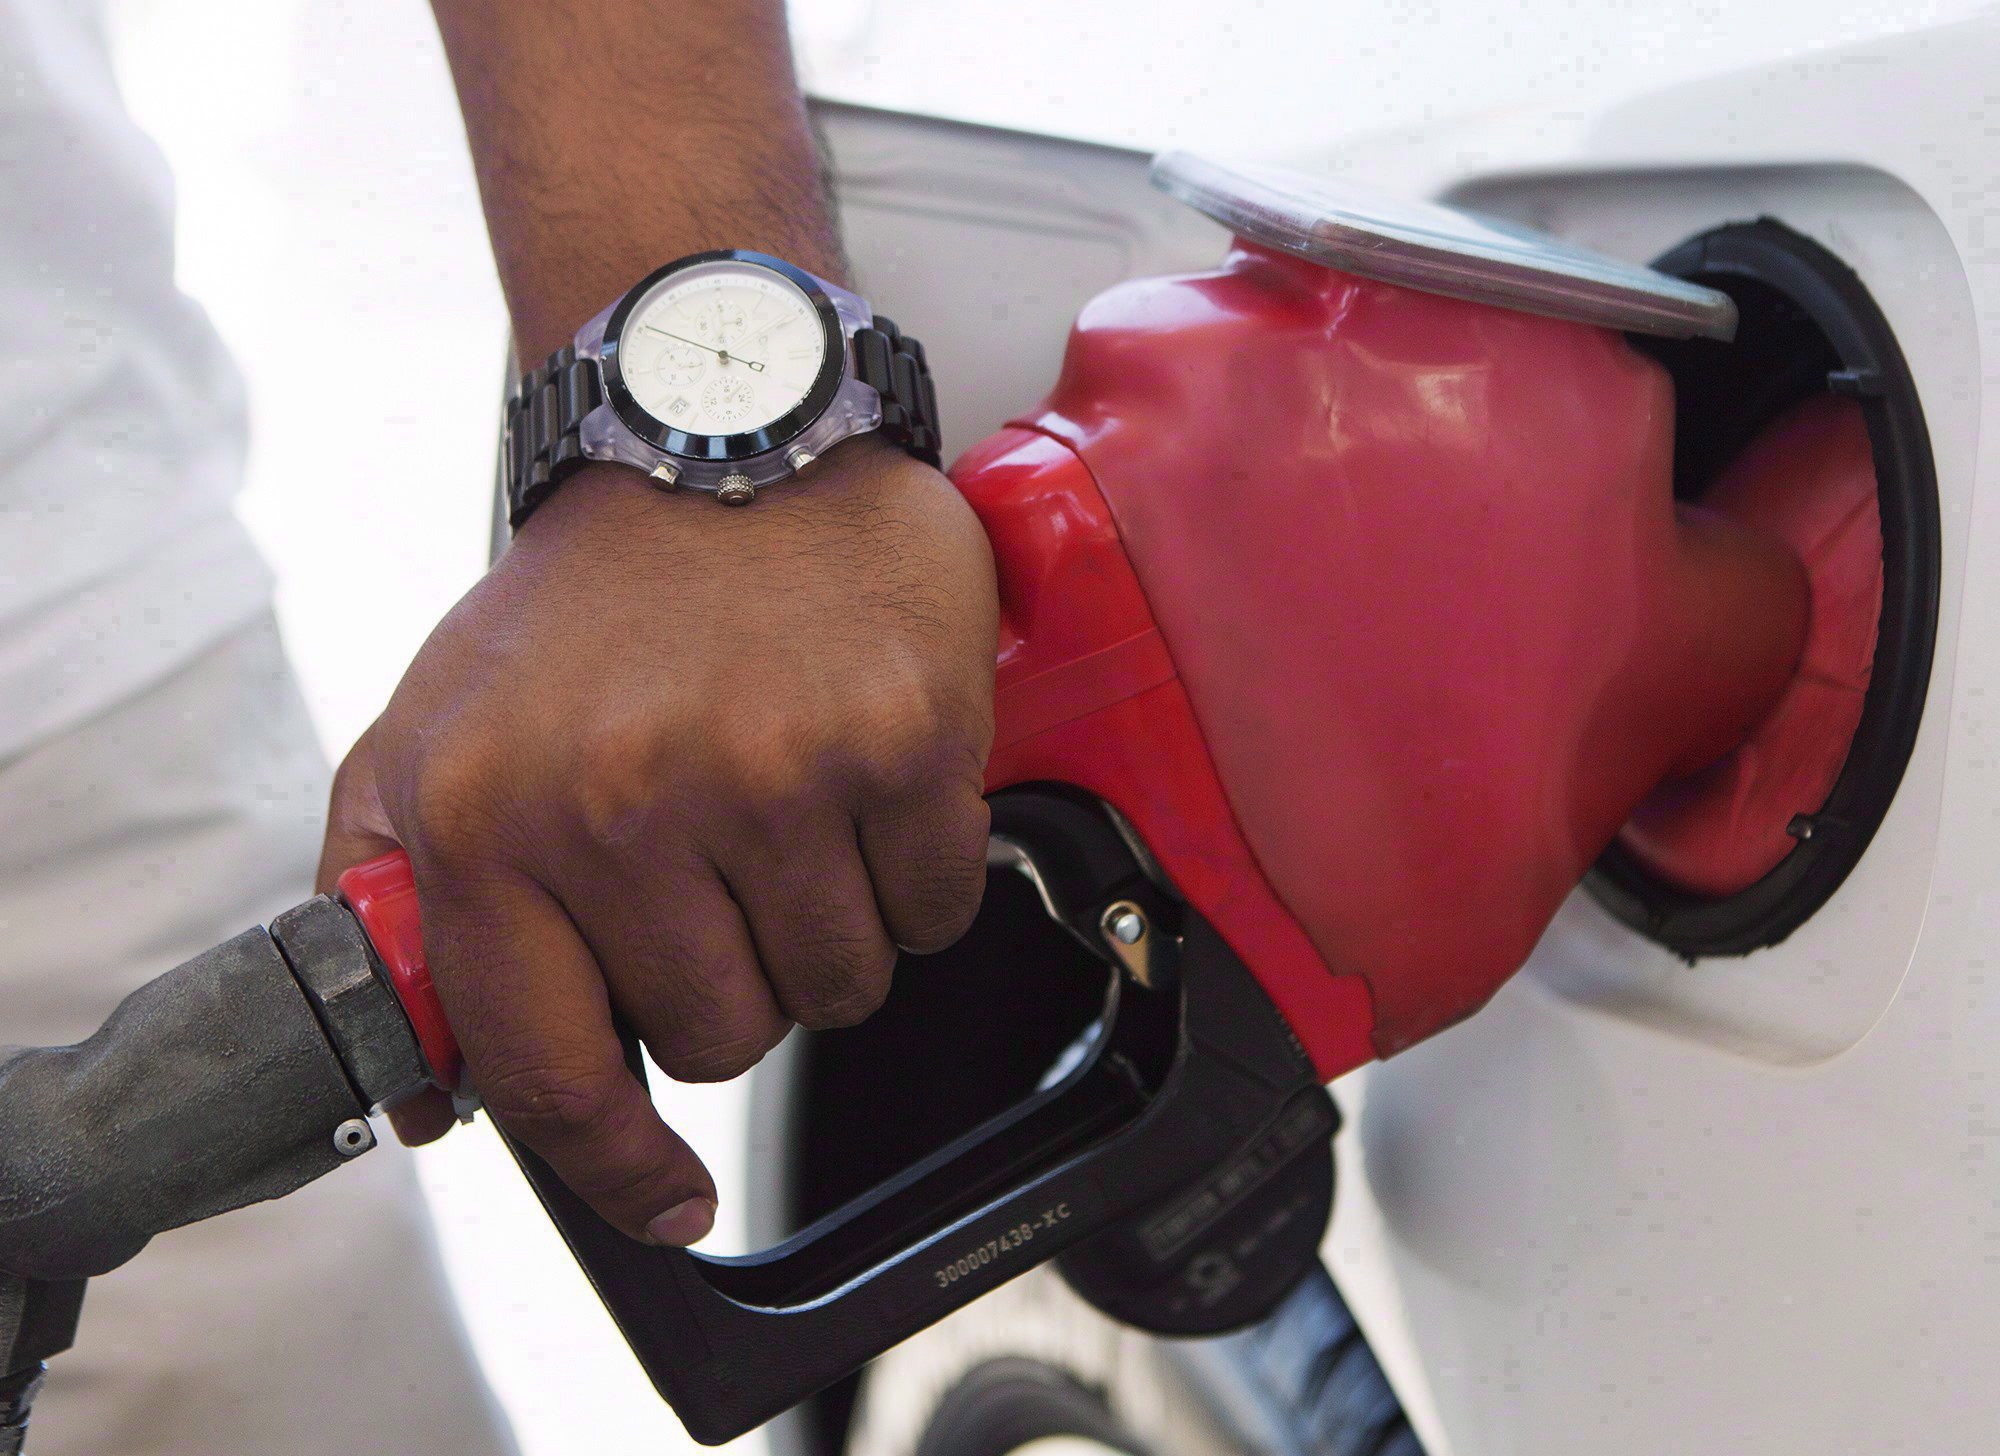 Gas prices in Saskatchewan ‘very sticky’ going into Thanksgiving weekend